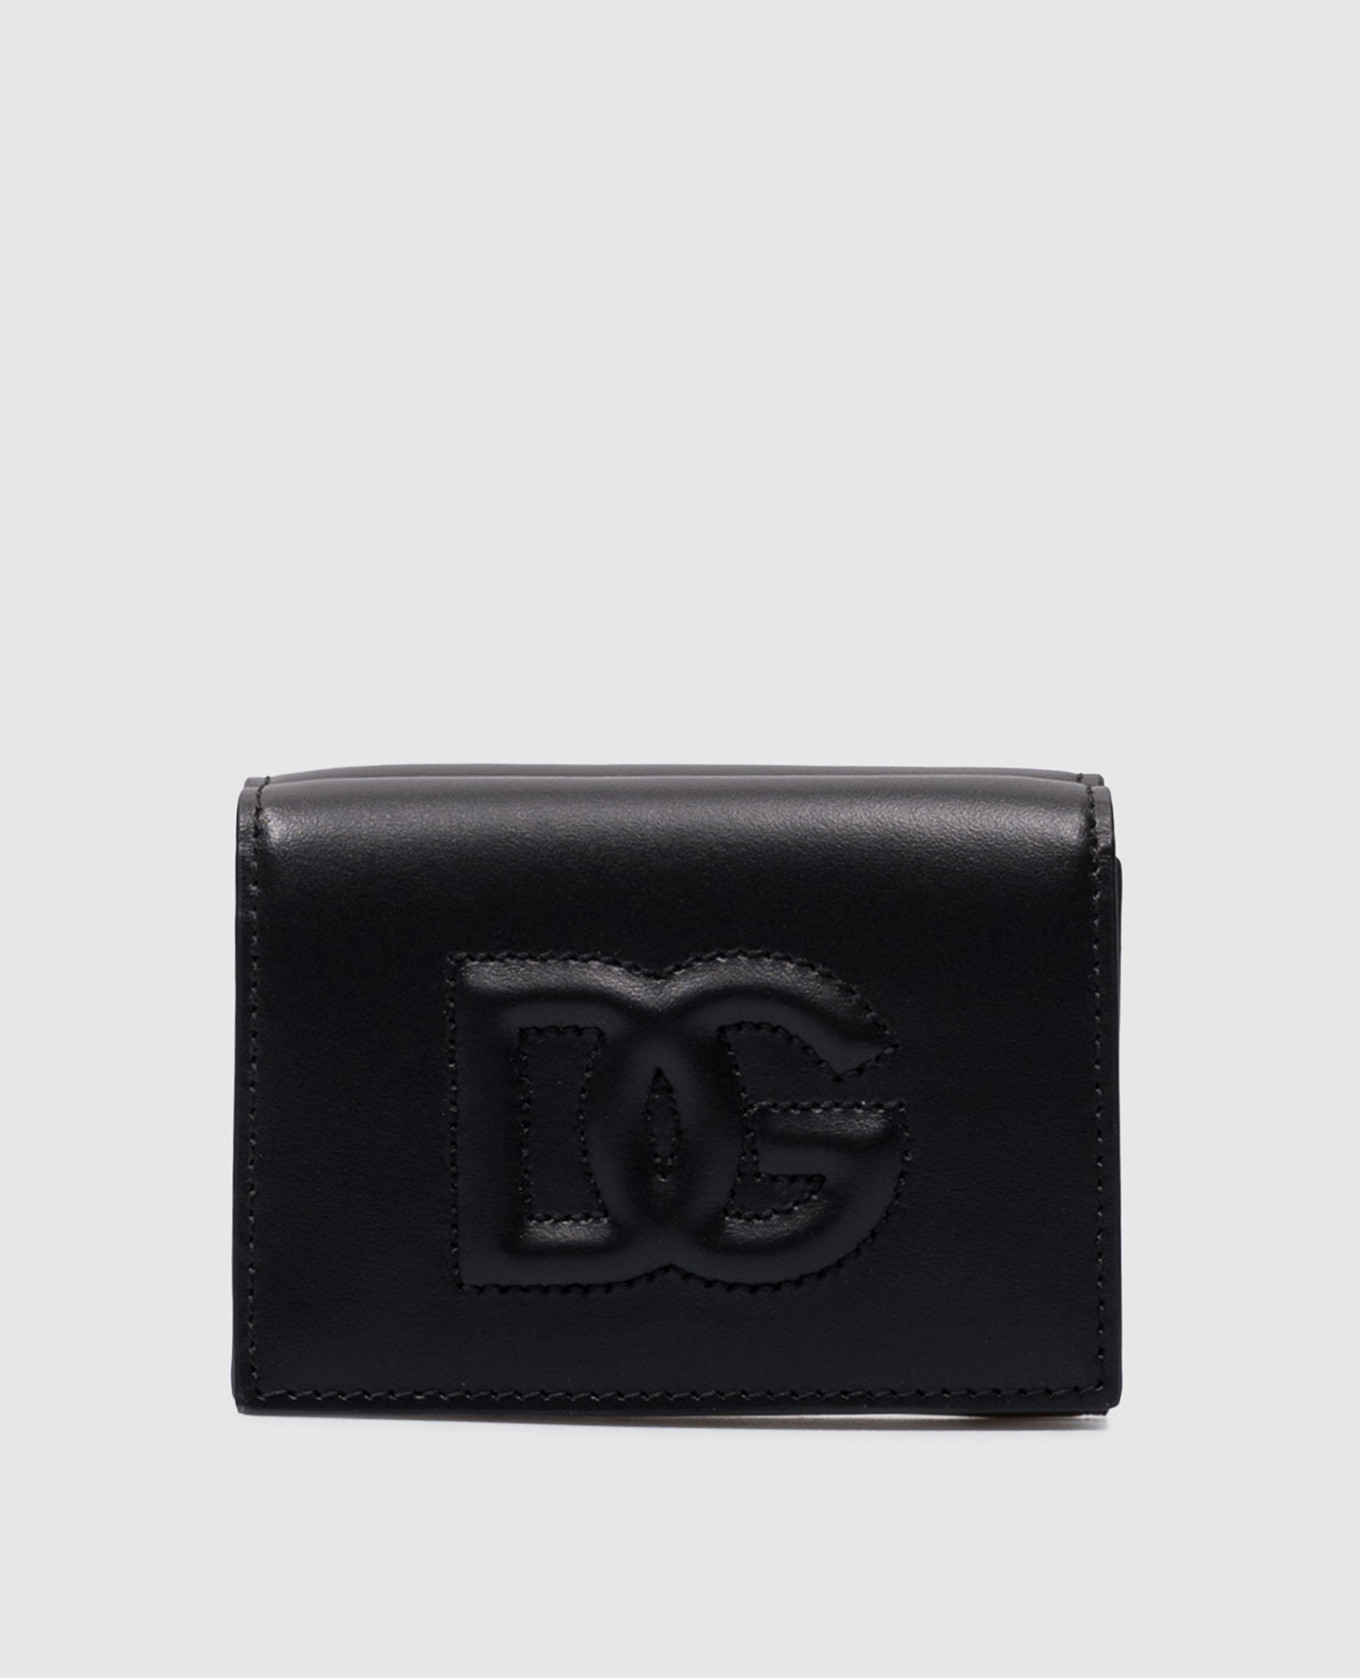 DG LOGO black leather purse